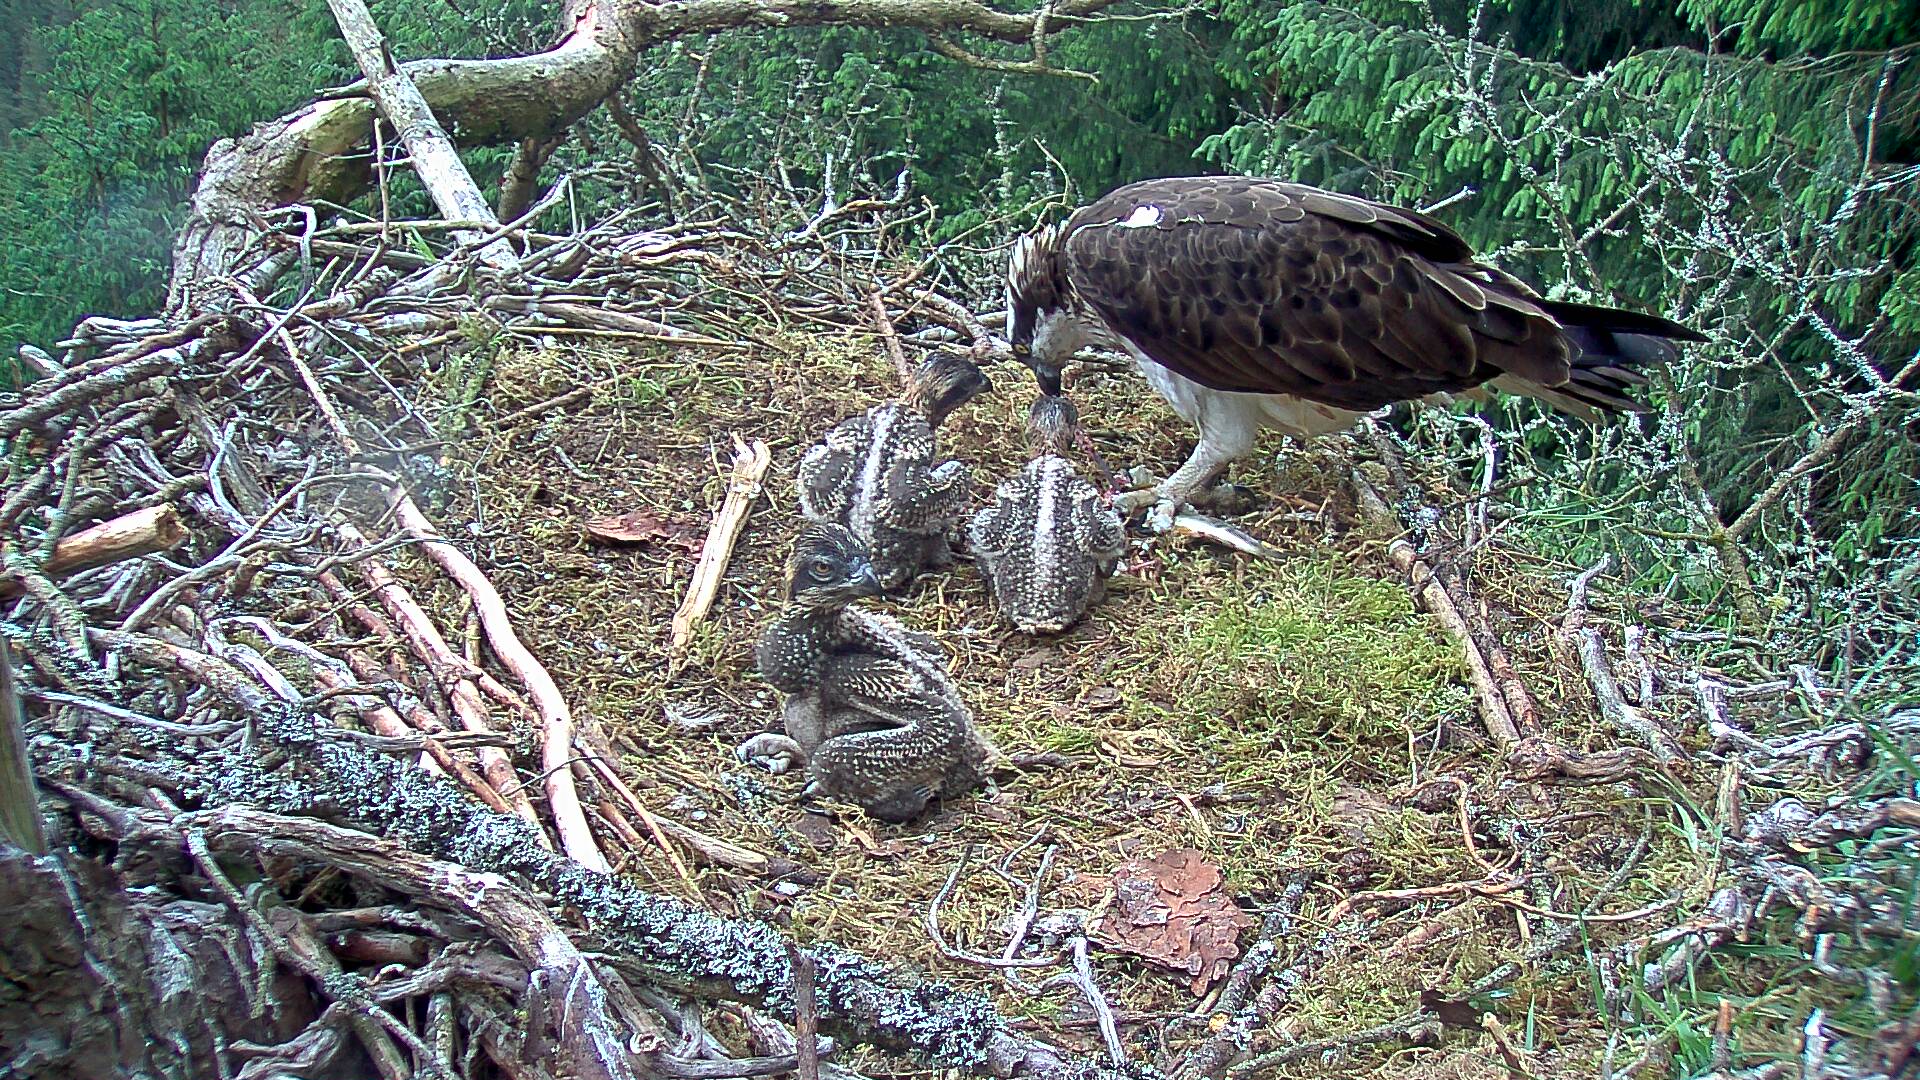 Adult osprey feeding chicks in nest